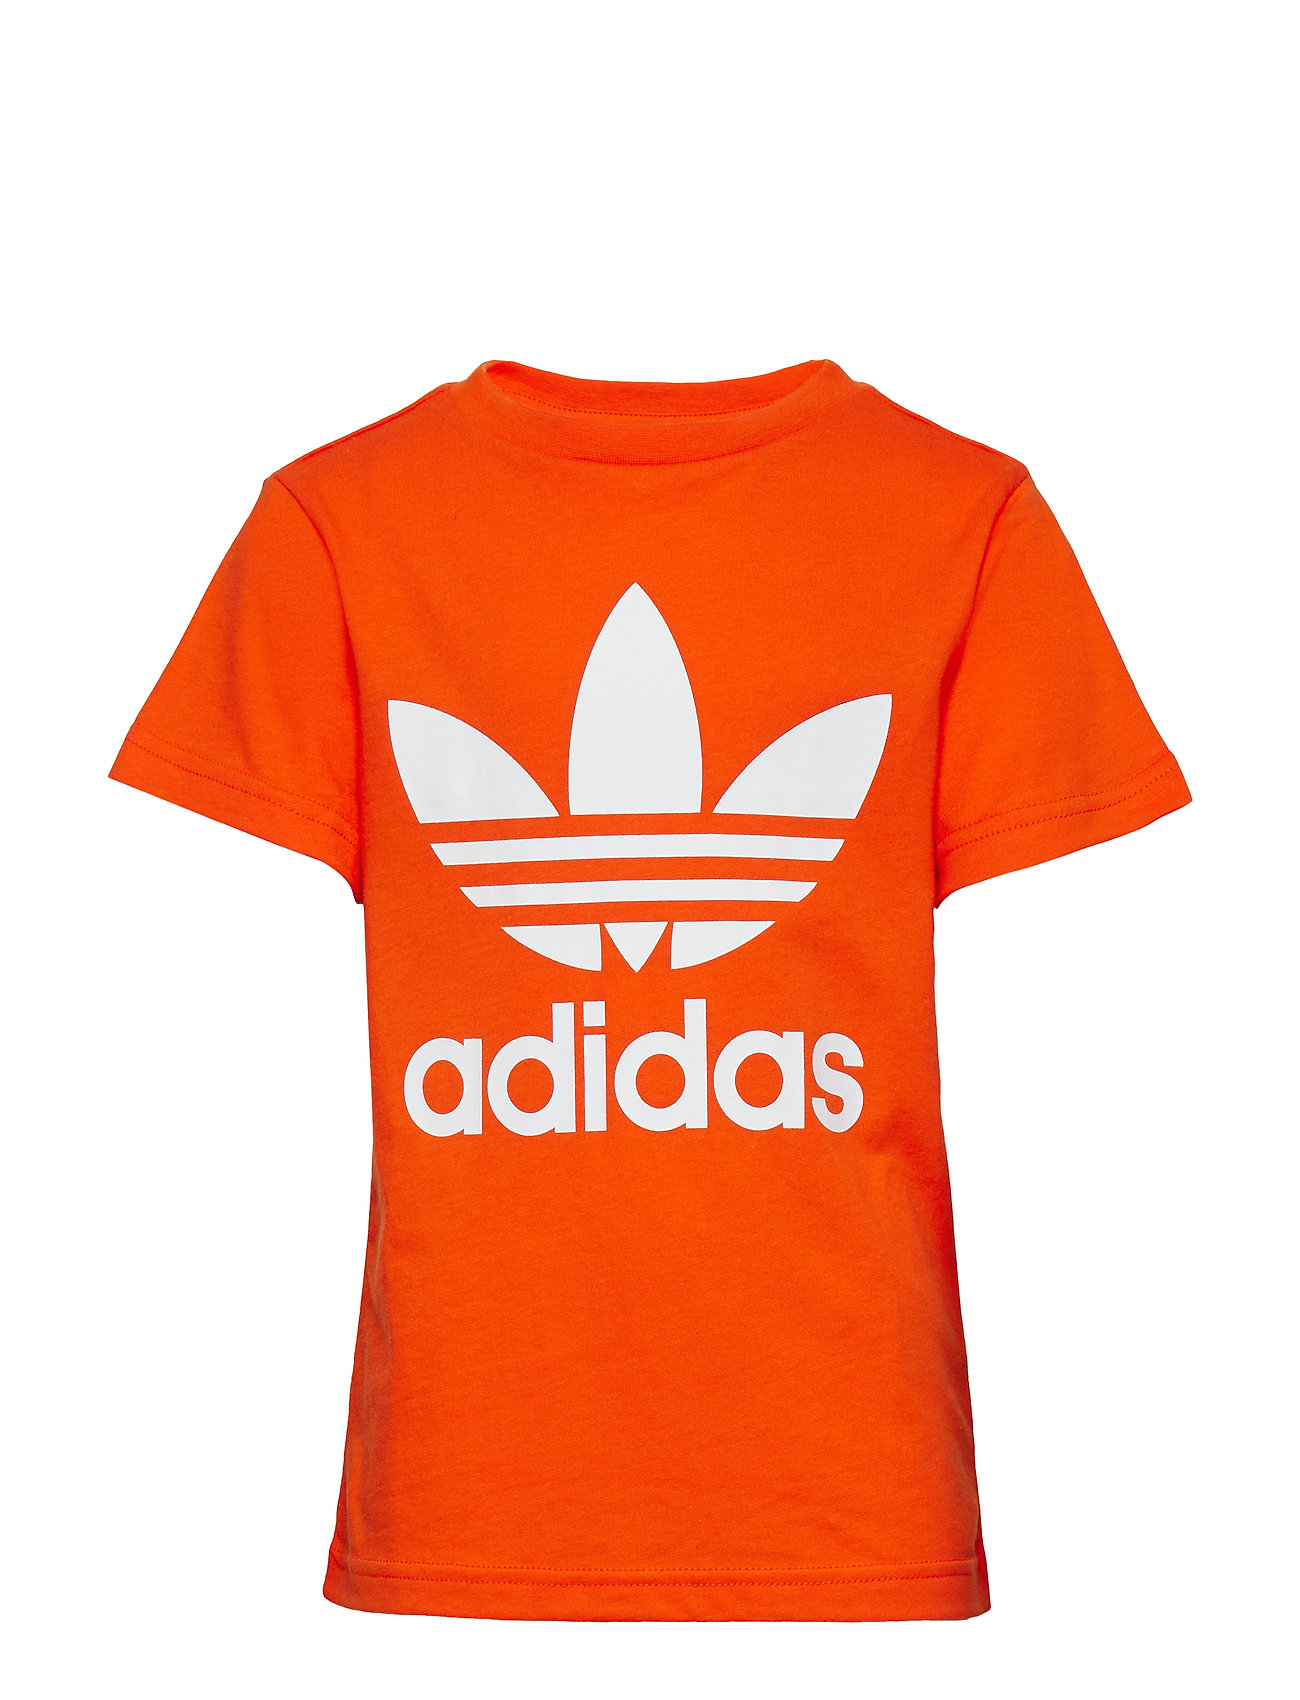 adidas trefoil t shirt orange